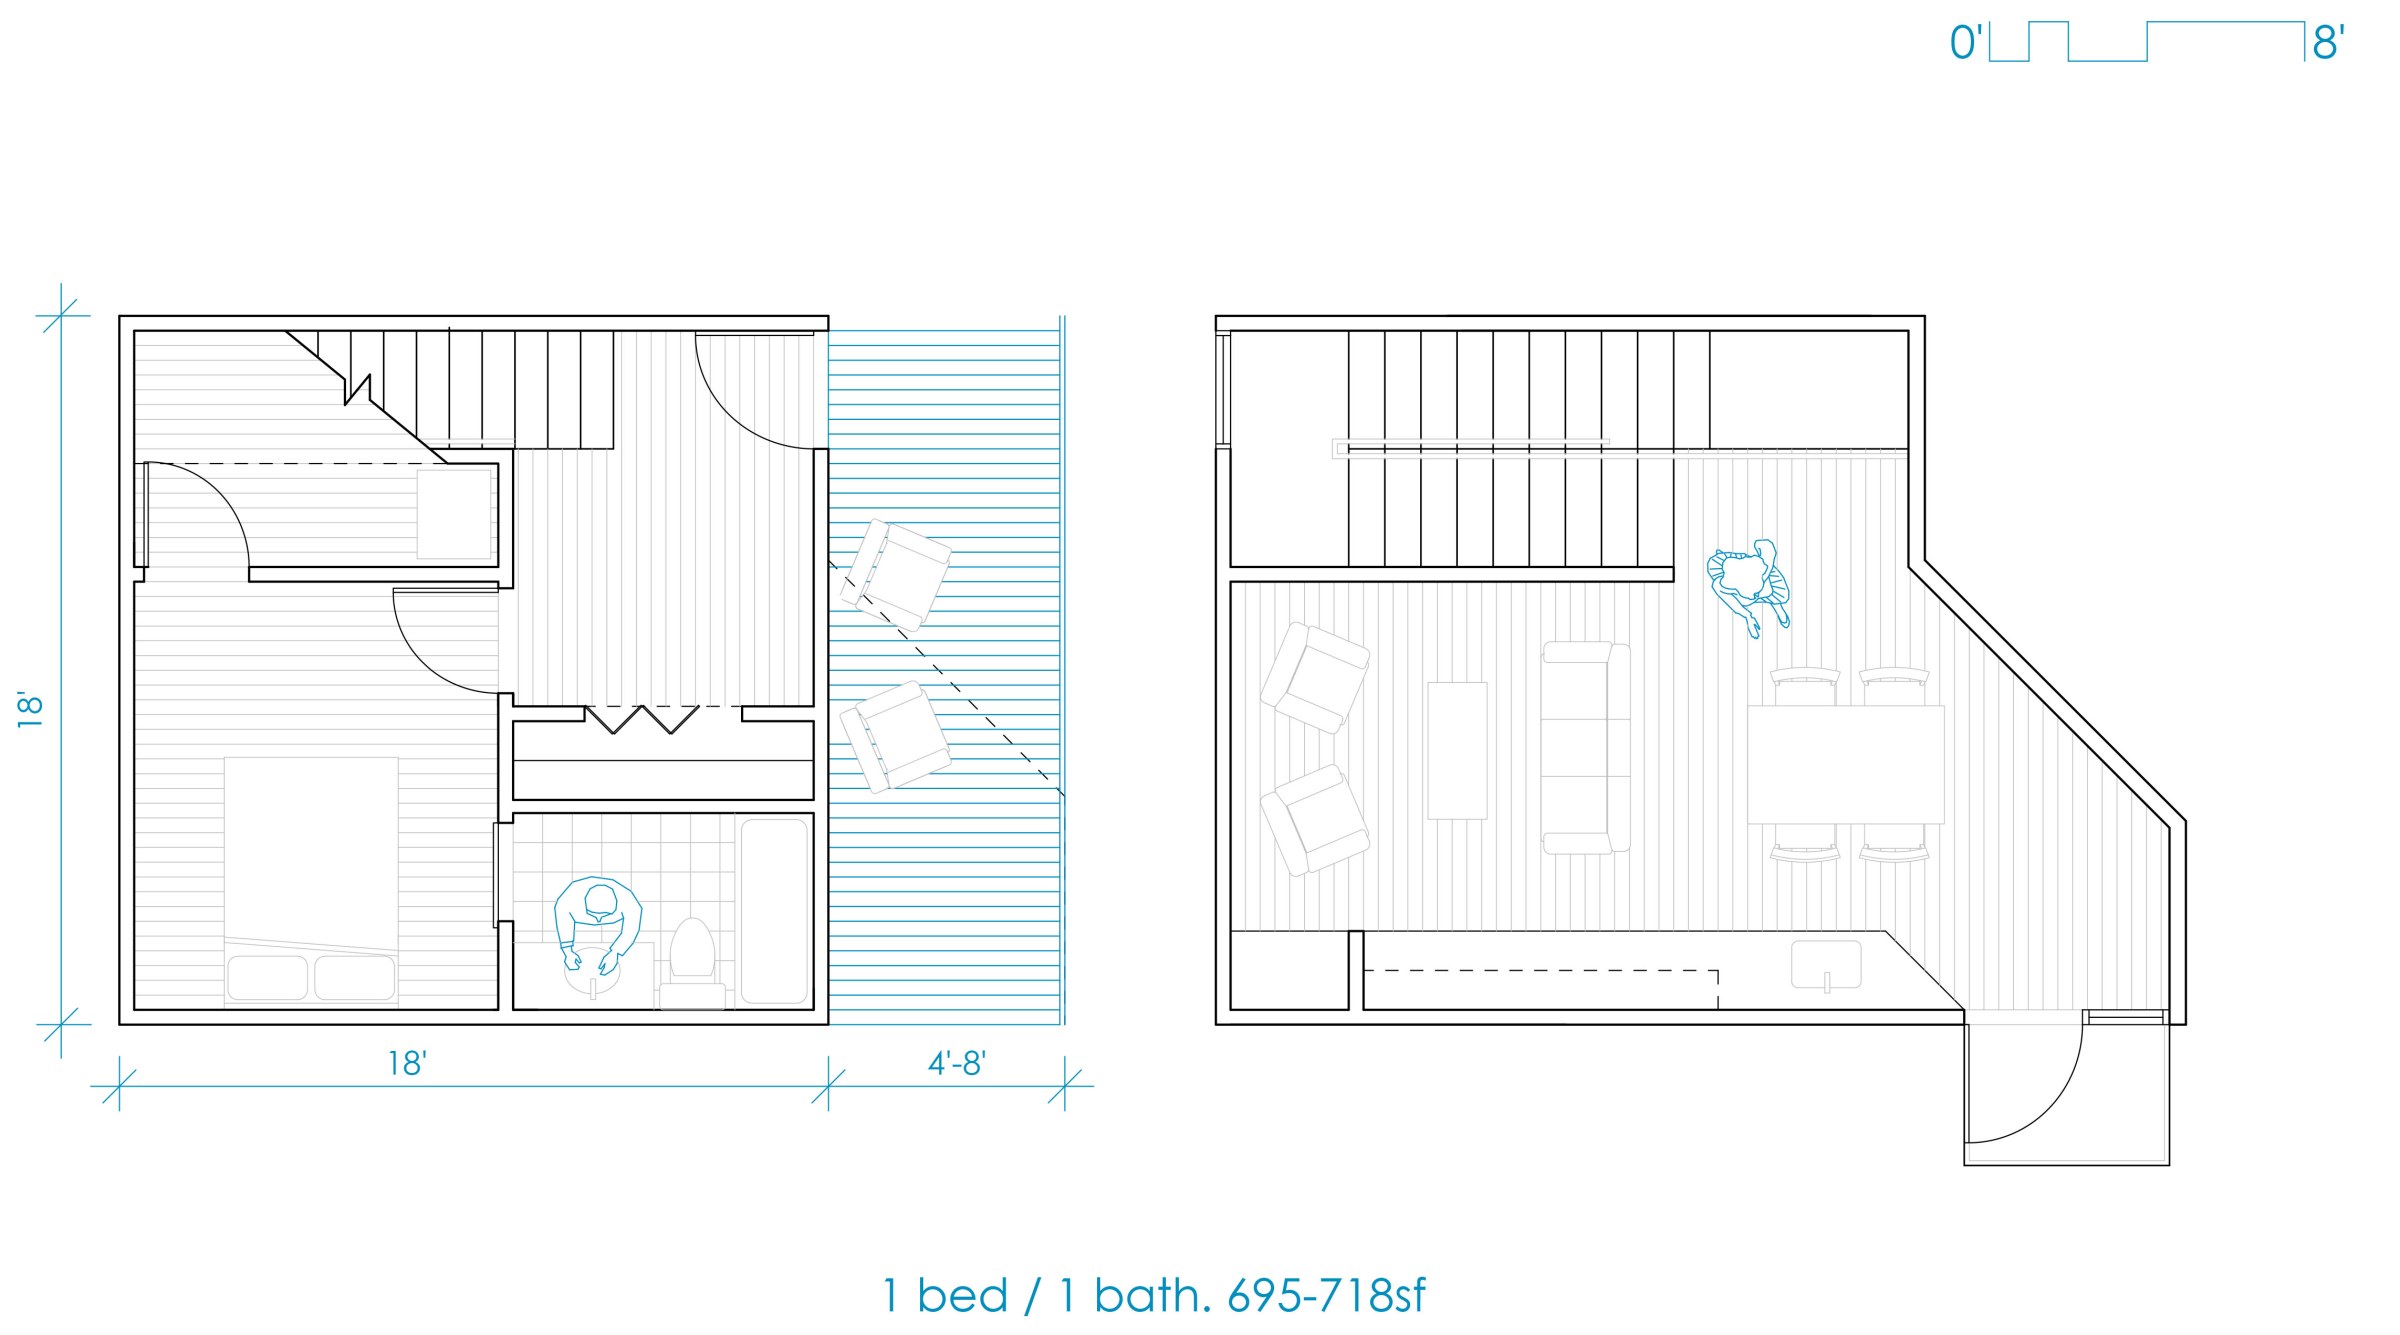 Daniel Tighe's thesis project: 1 bedroom 1 bathroom floor plan, long